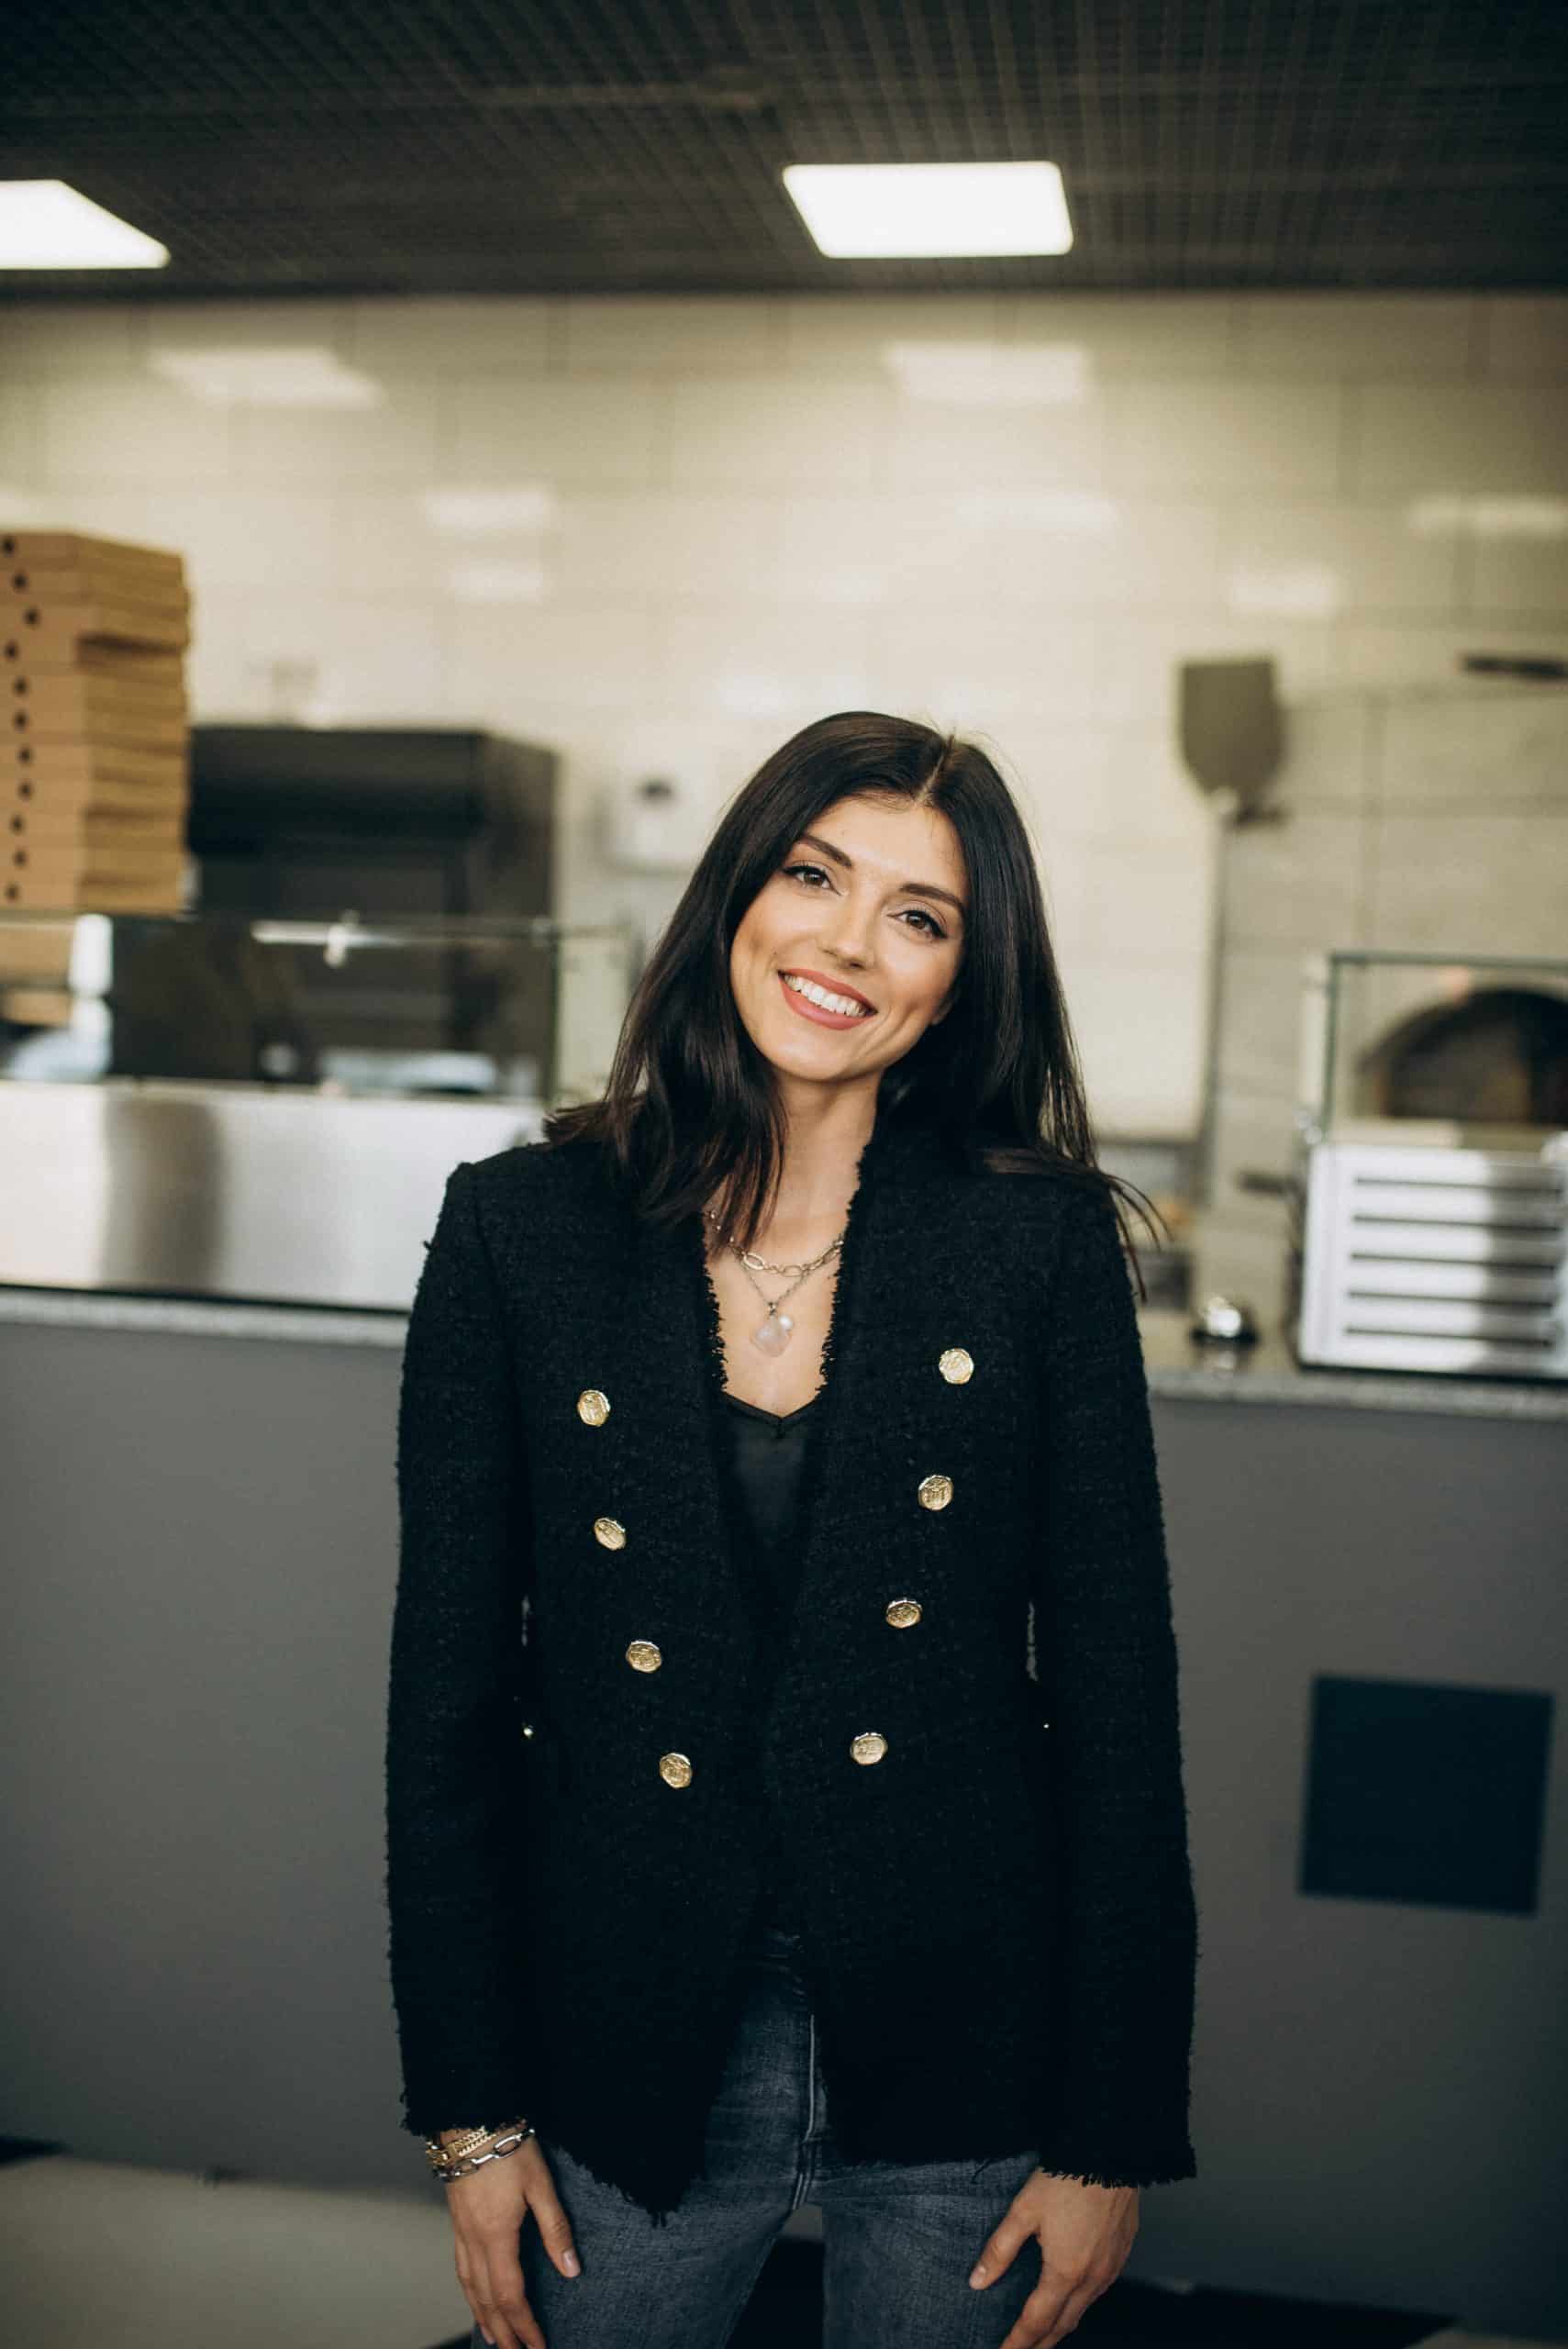 Знай наших — Наталя співвласниця в Луцьку | LA PIEC wood-fired pizza delivery